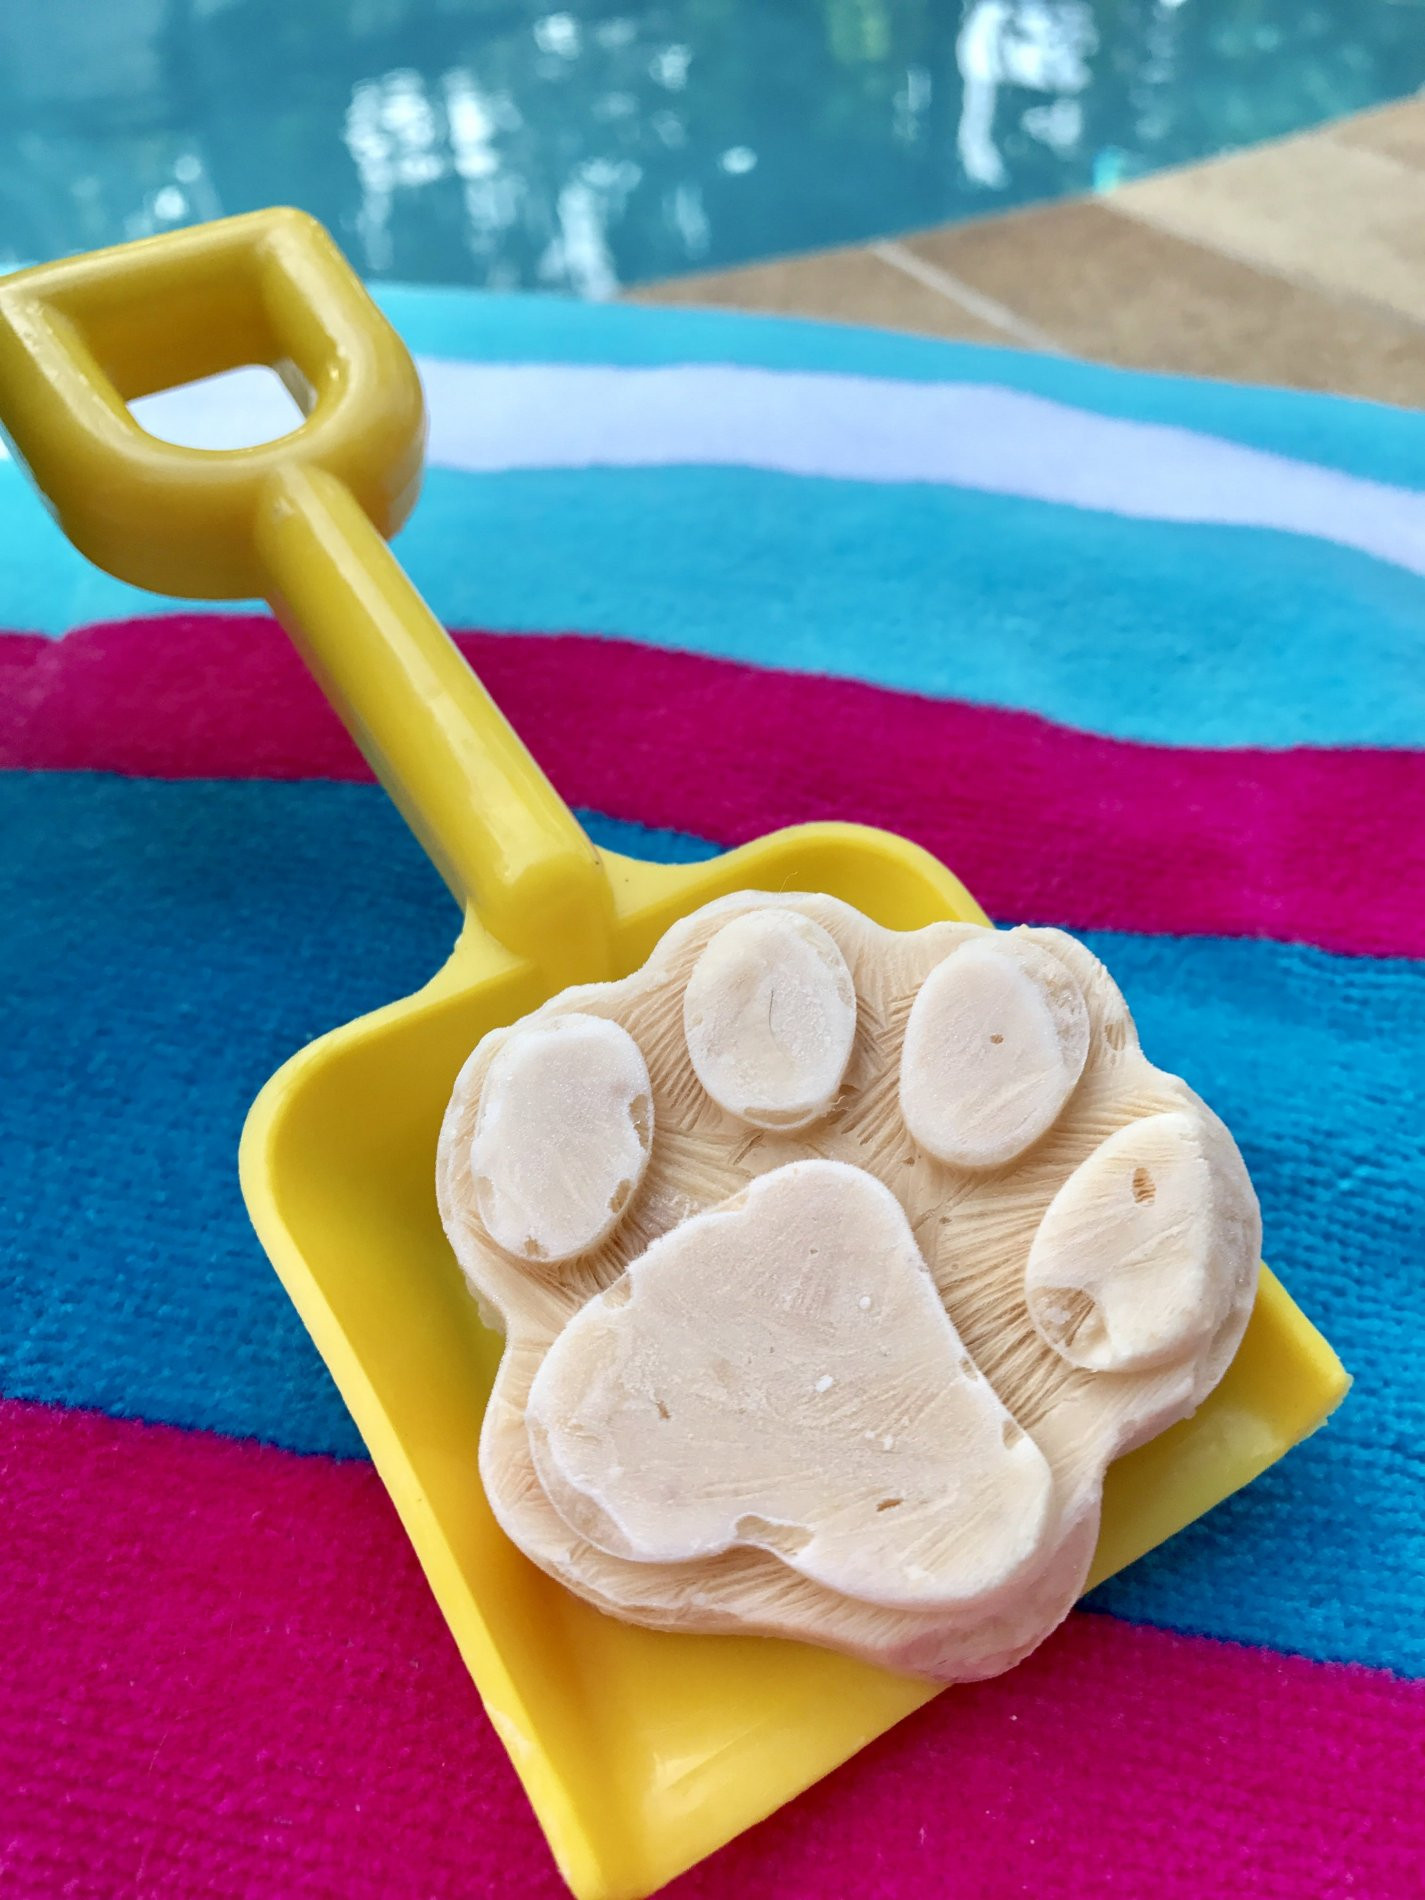 DIY Dog Ice Cream
 Five Reasons to Make This Homemade Dog Ice Cream